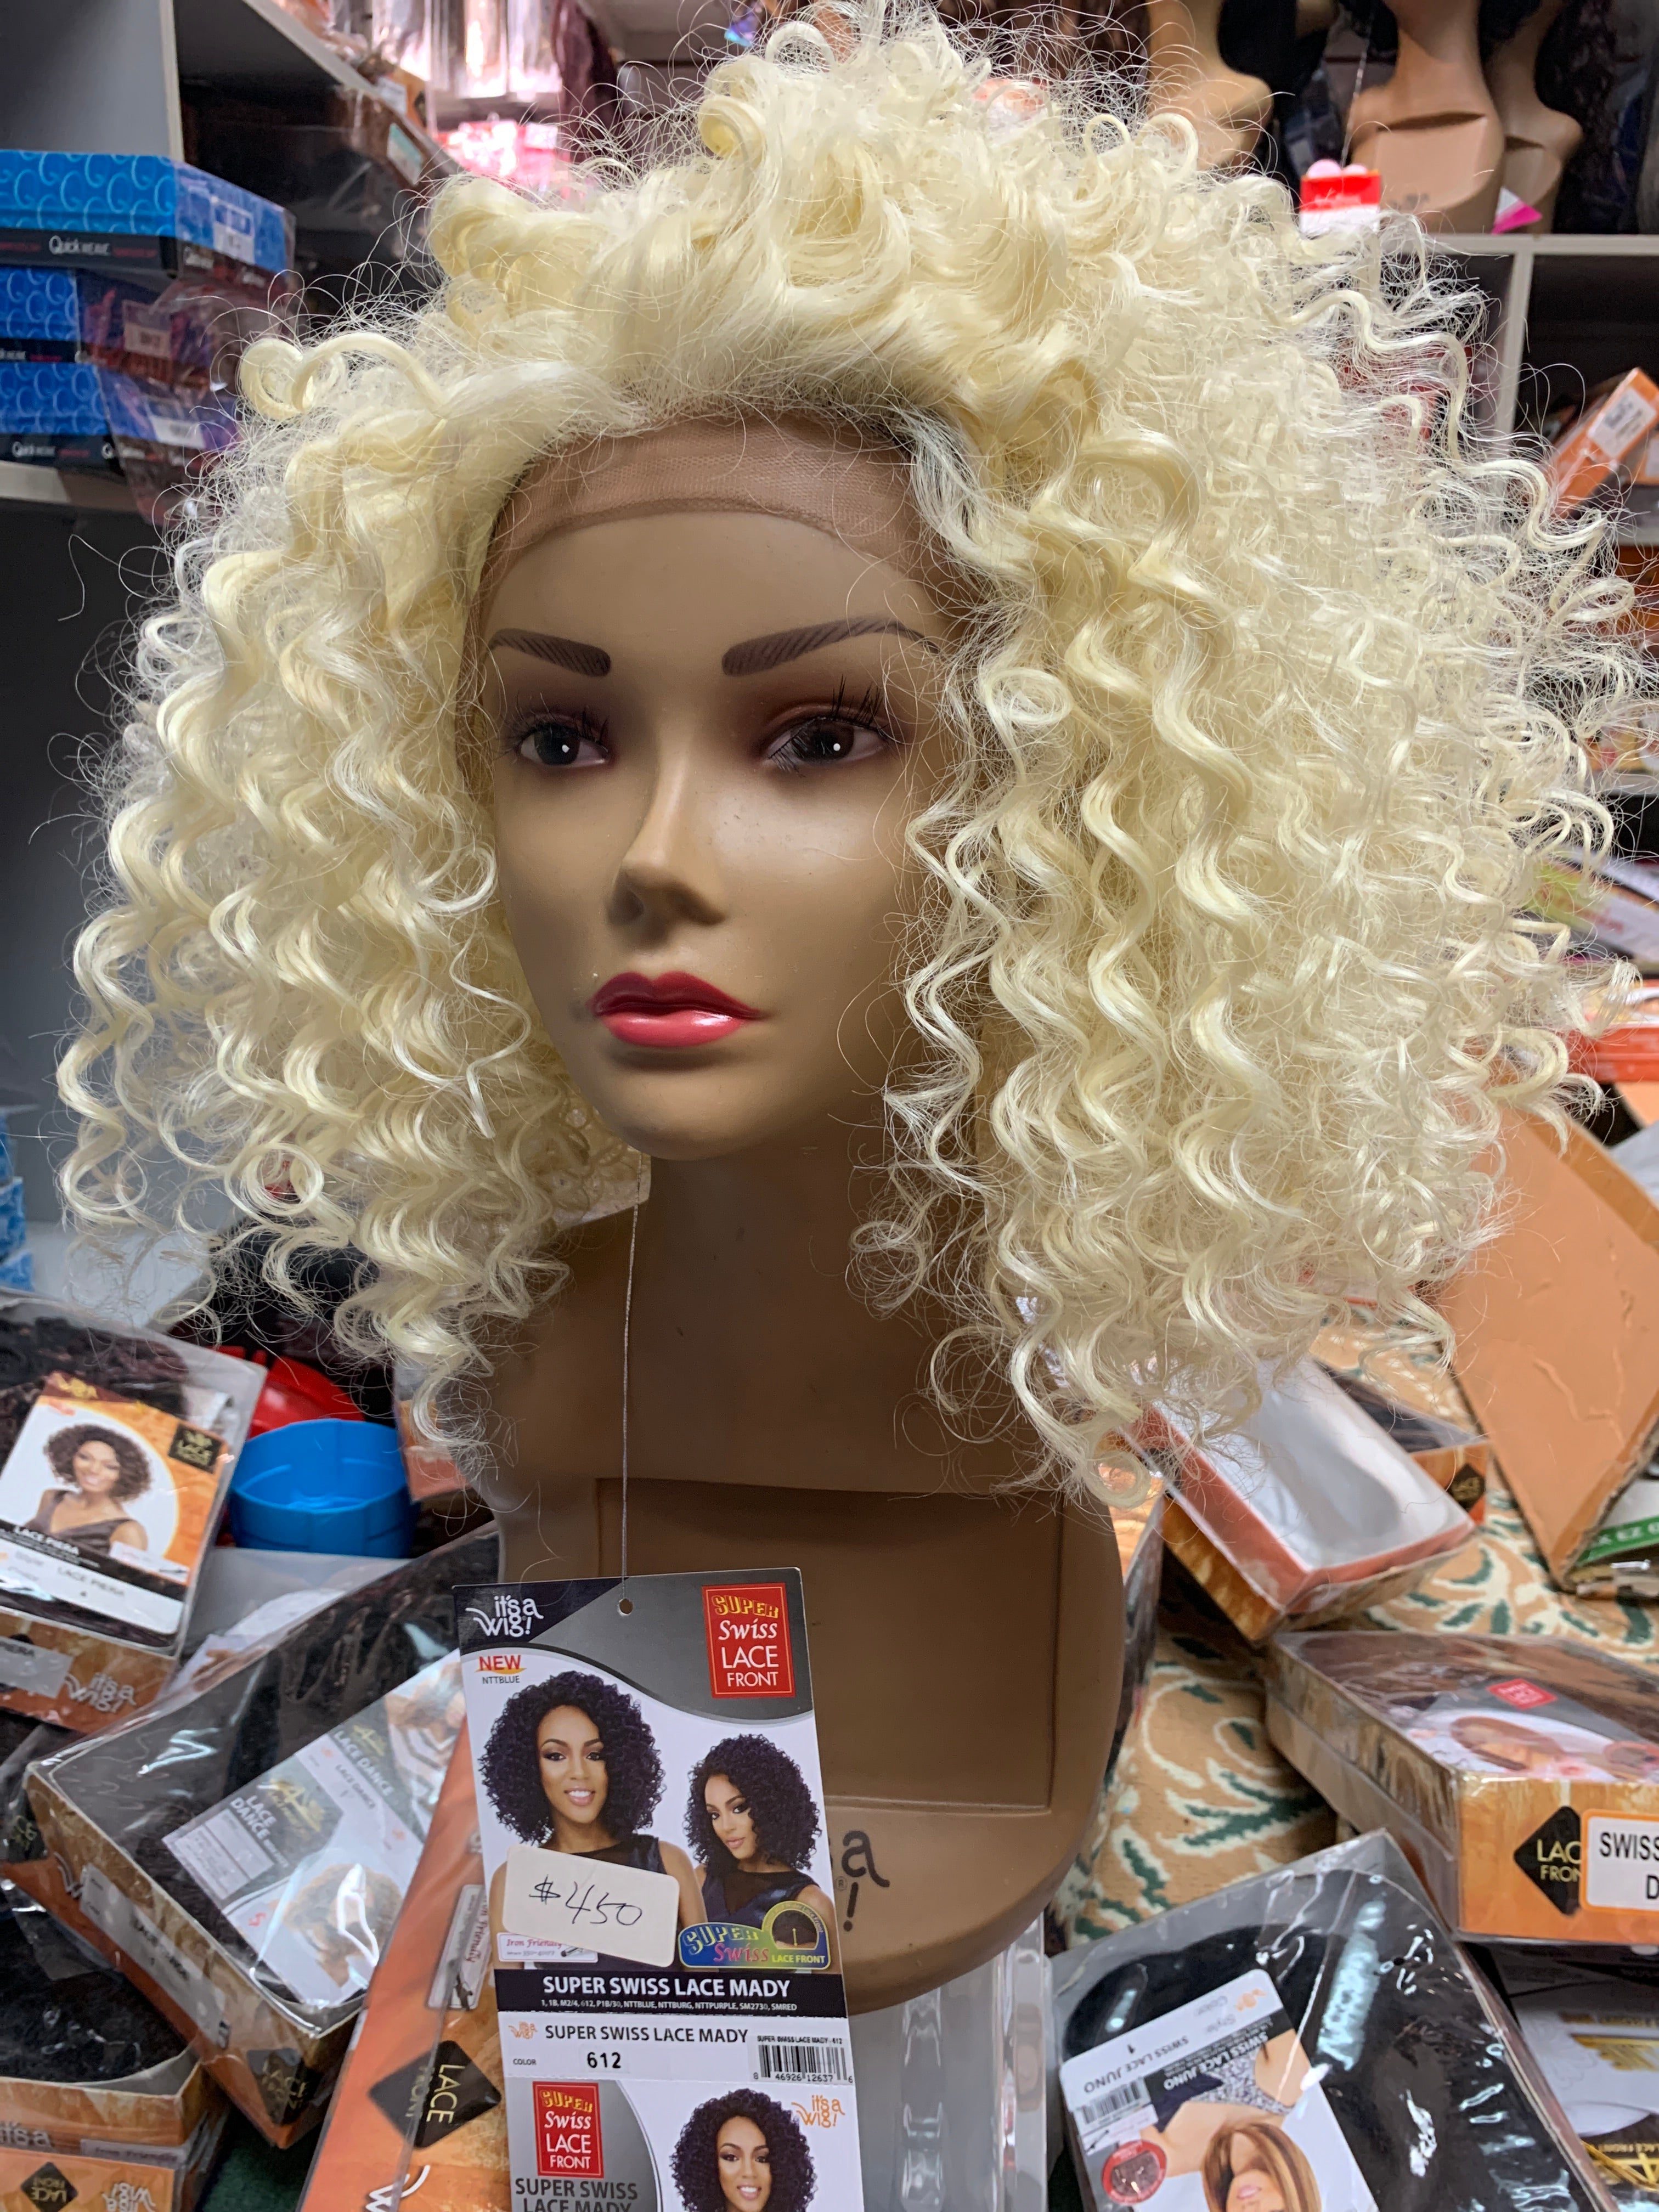 It’s a wig super swiss lace mady